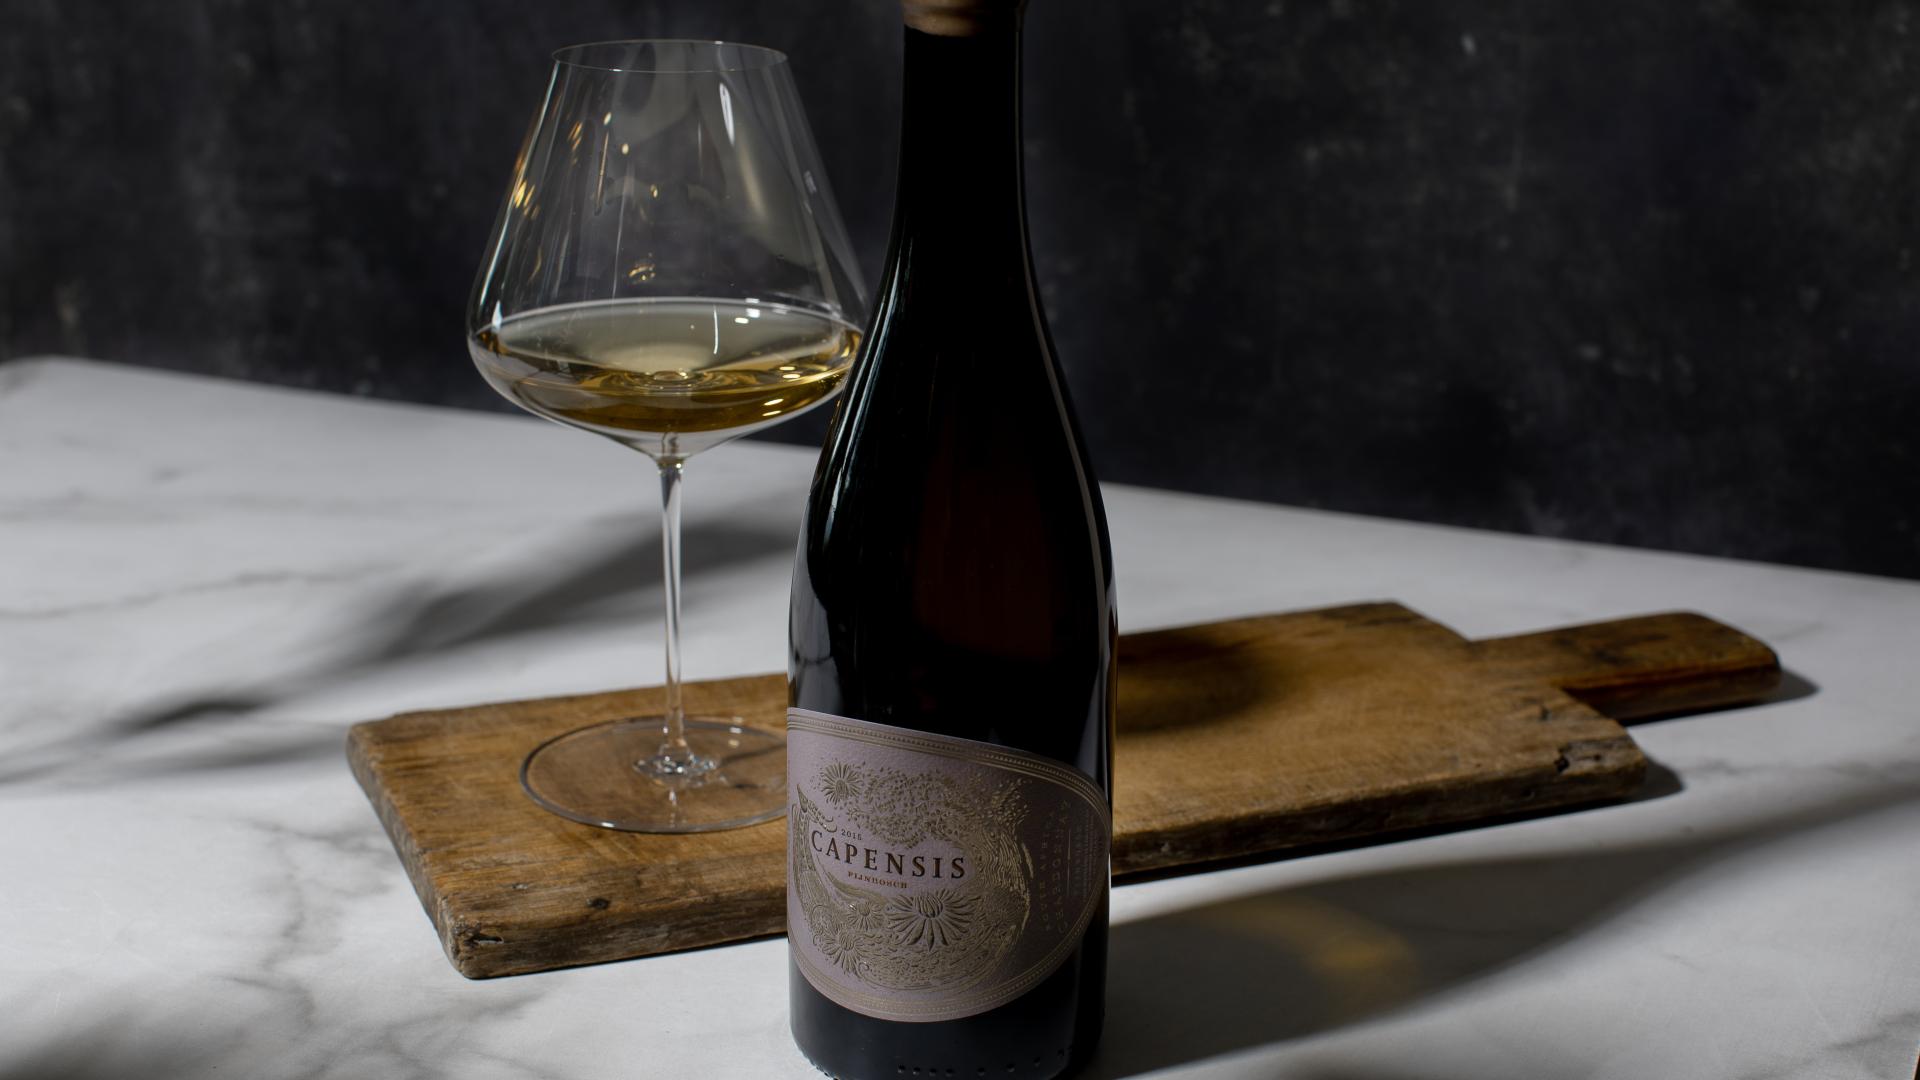 Capensis Fijnbosch Chardonnay on a table